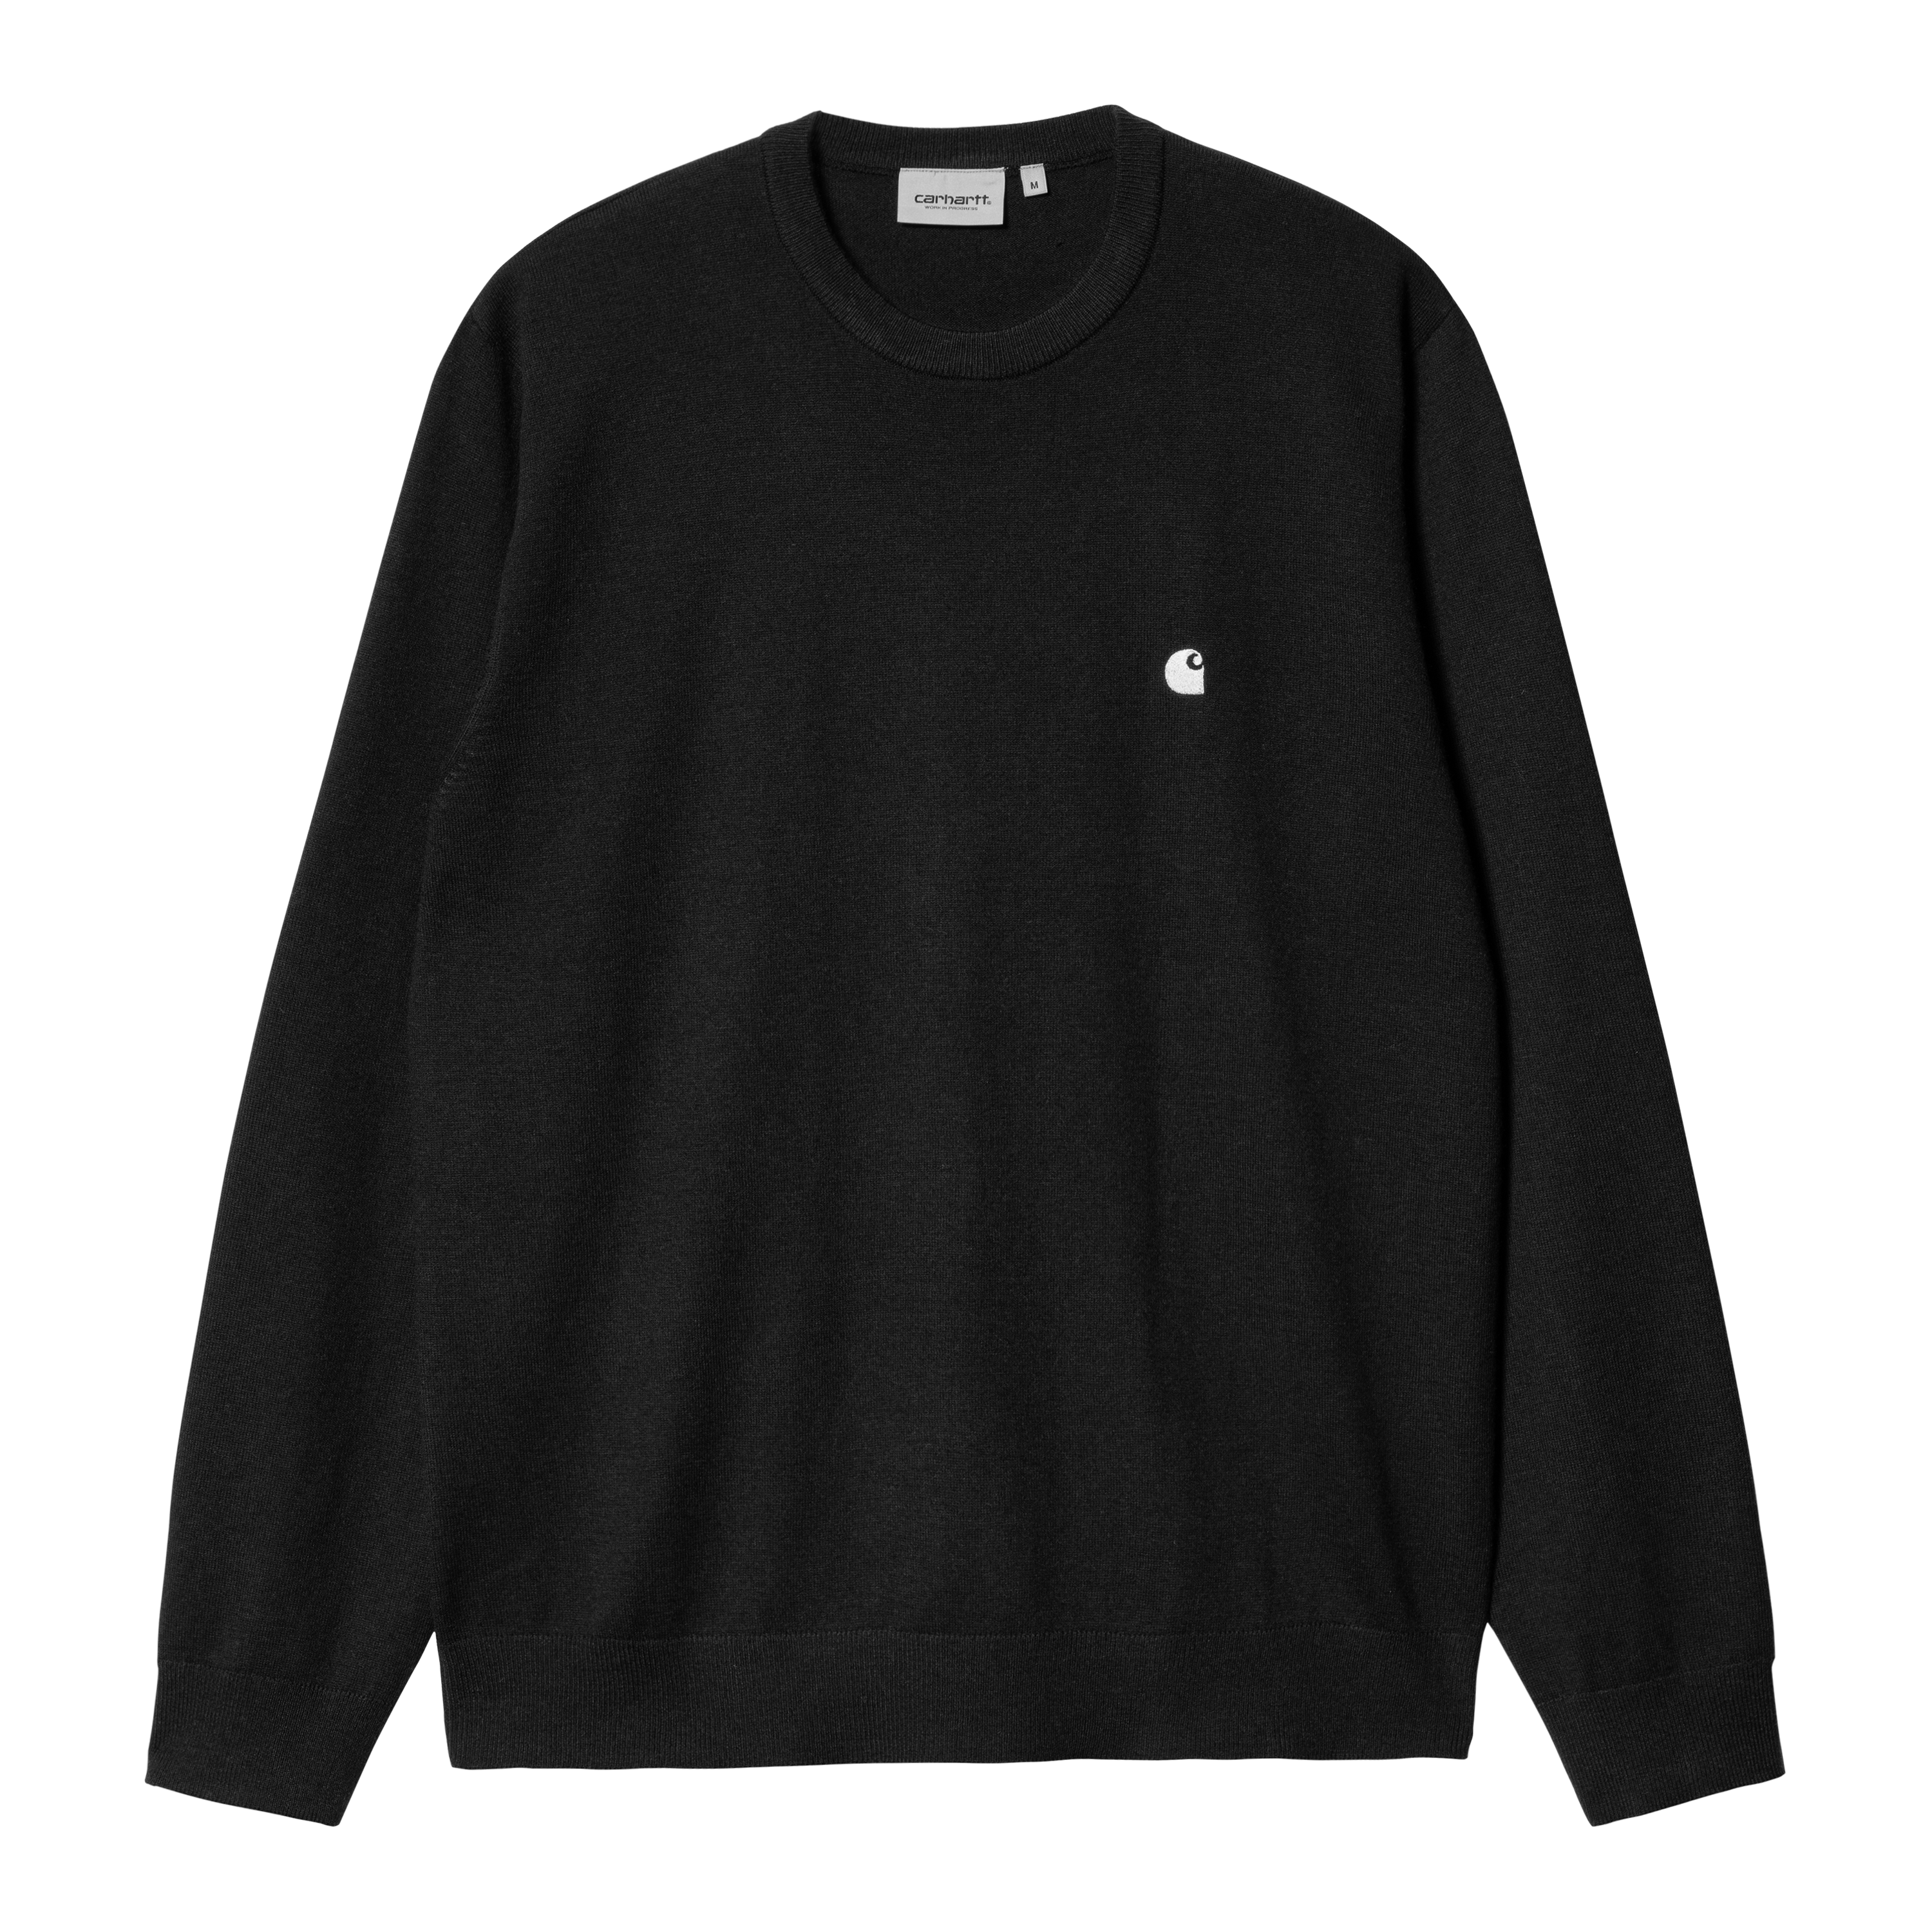 Carhartt WIP Madison Sweater in Black